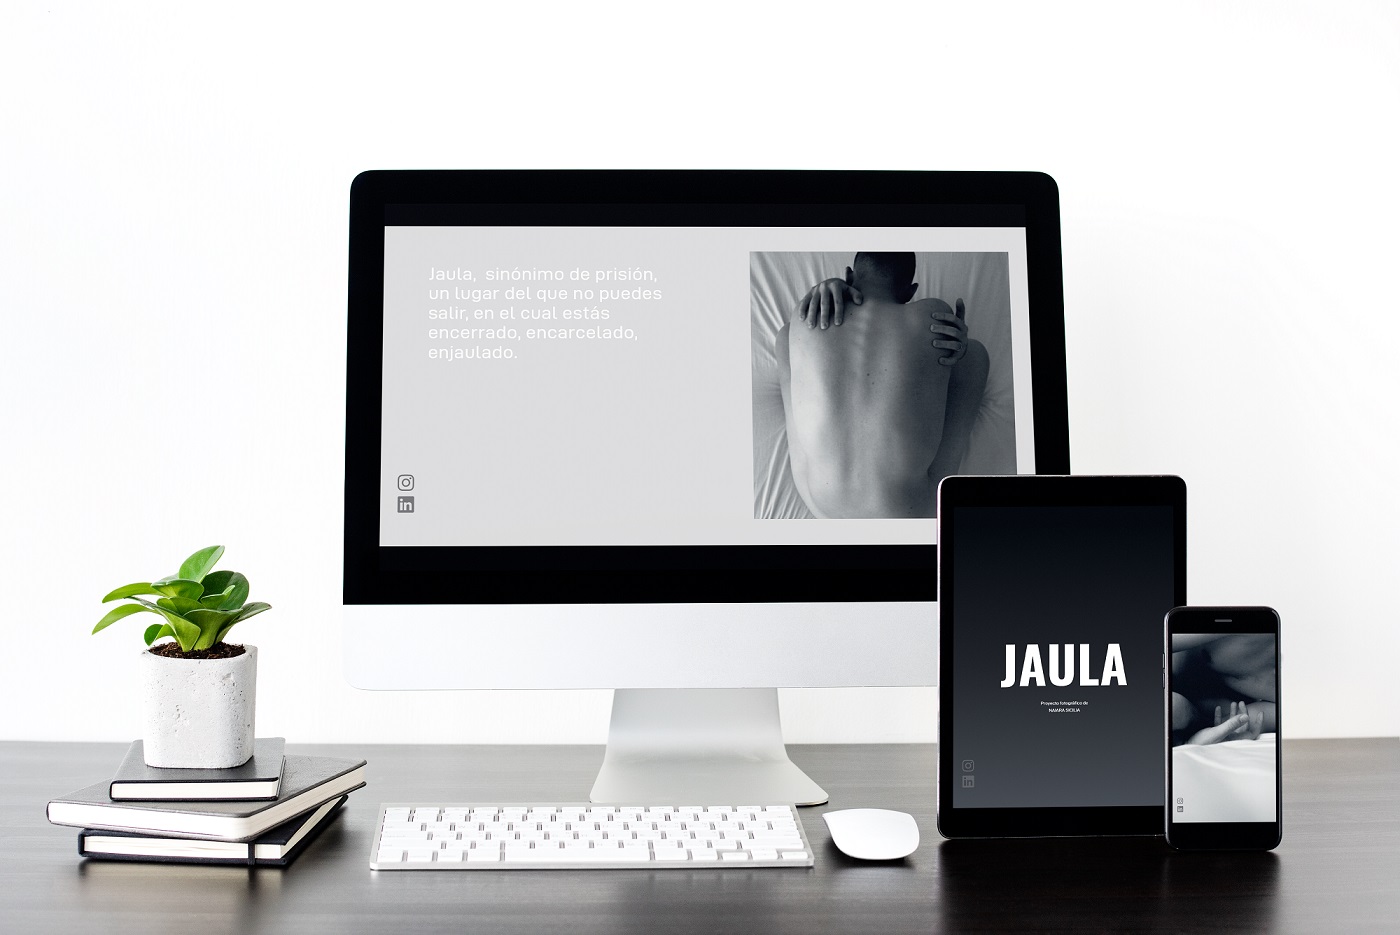 JAULA by Naiara Sicilia de Pablo - Creative Work